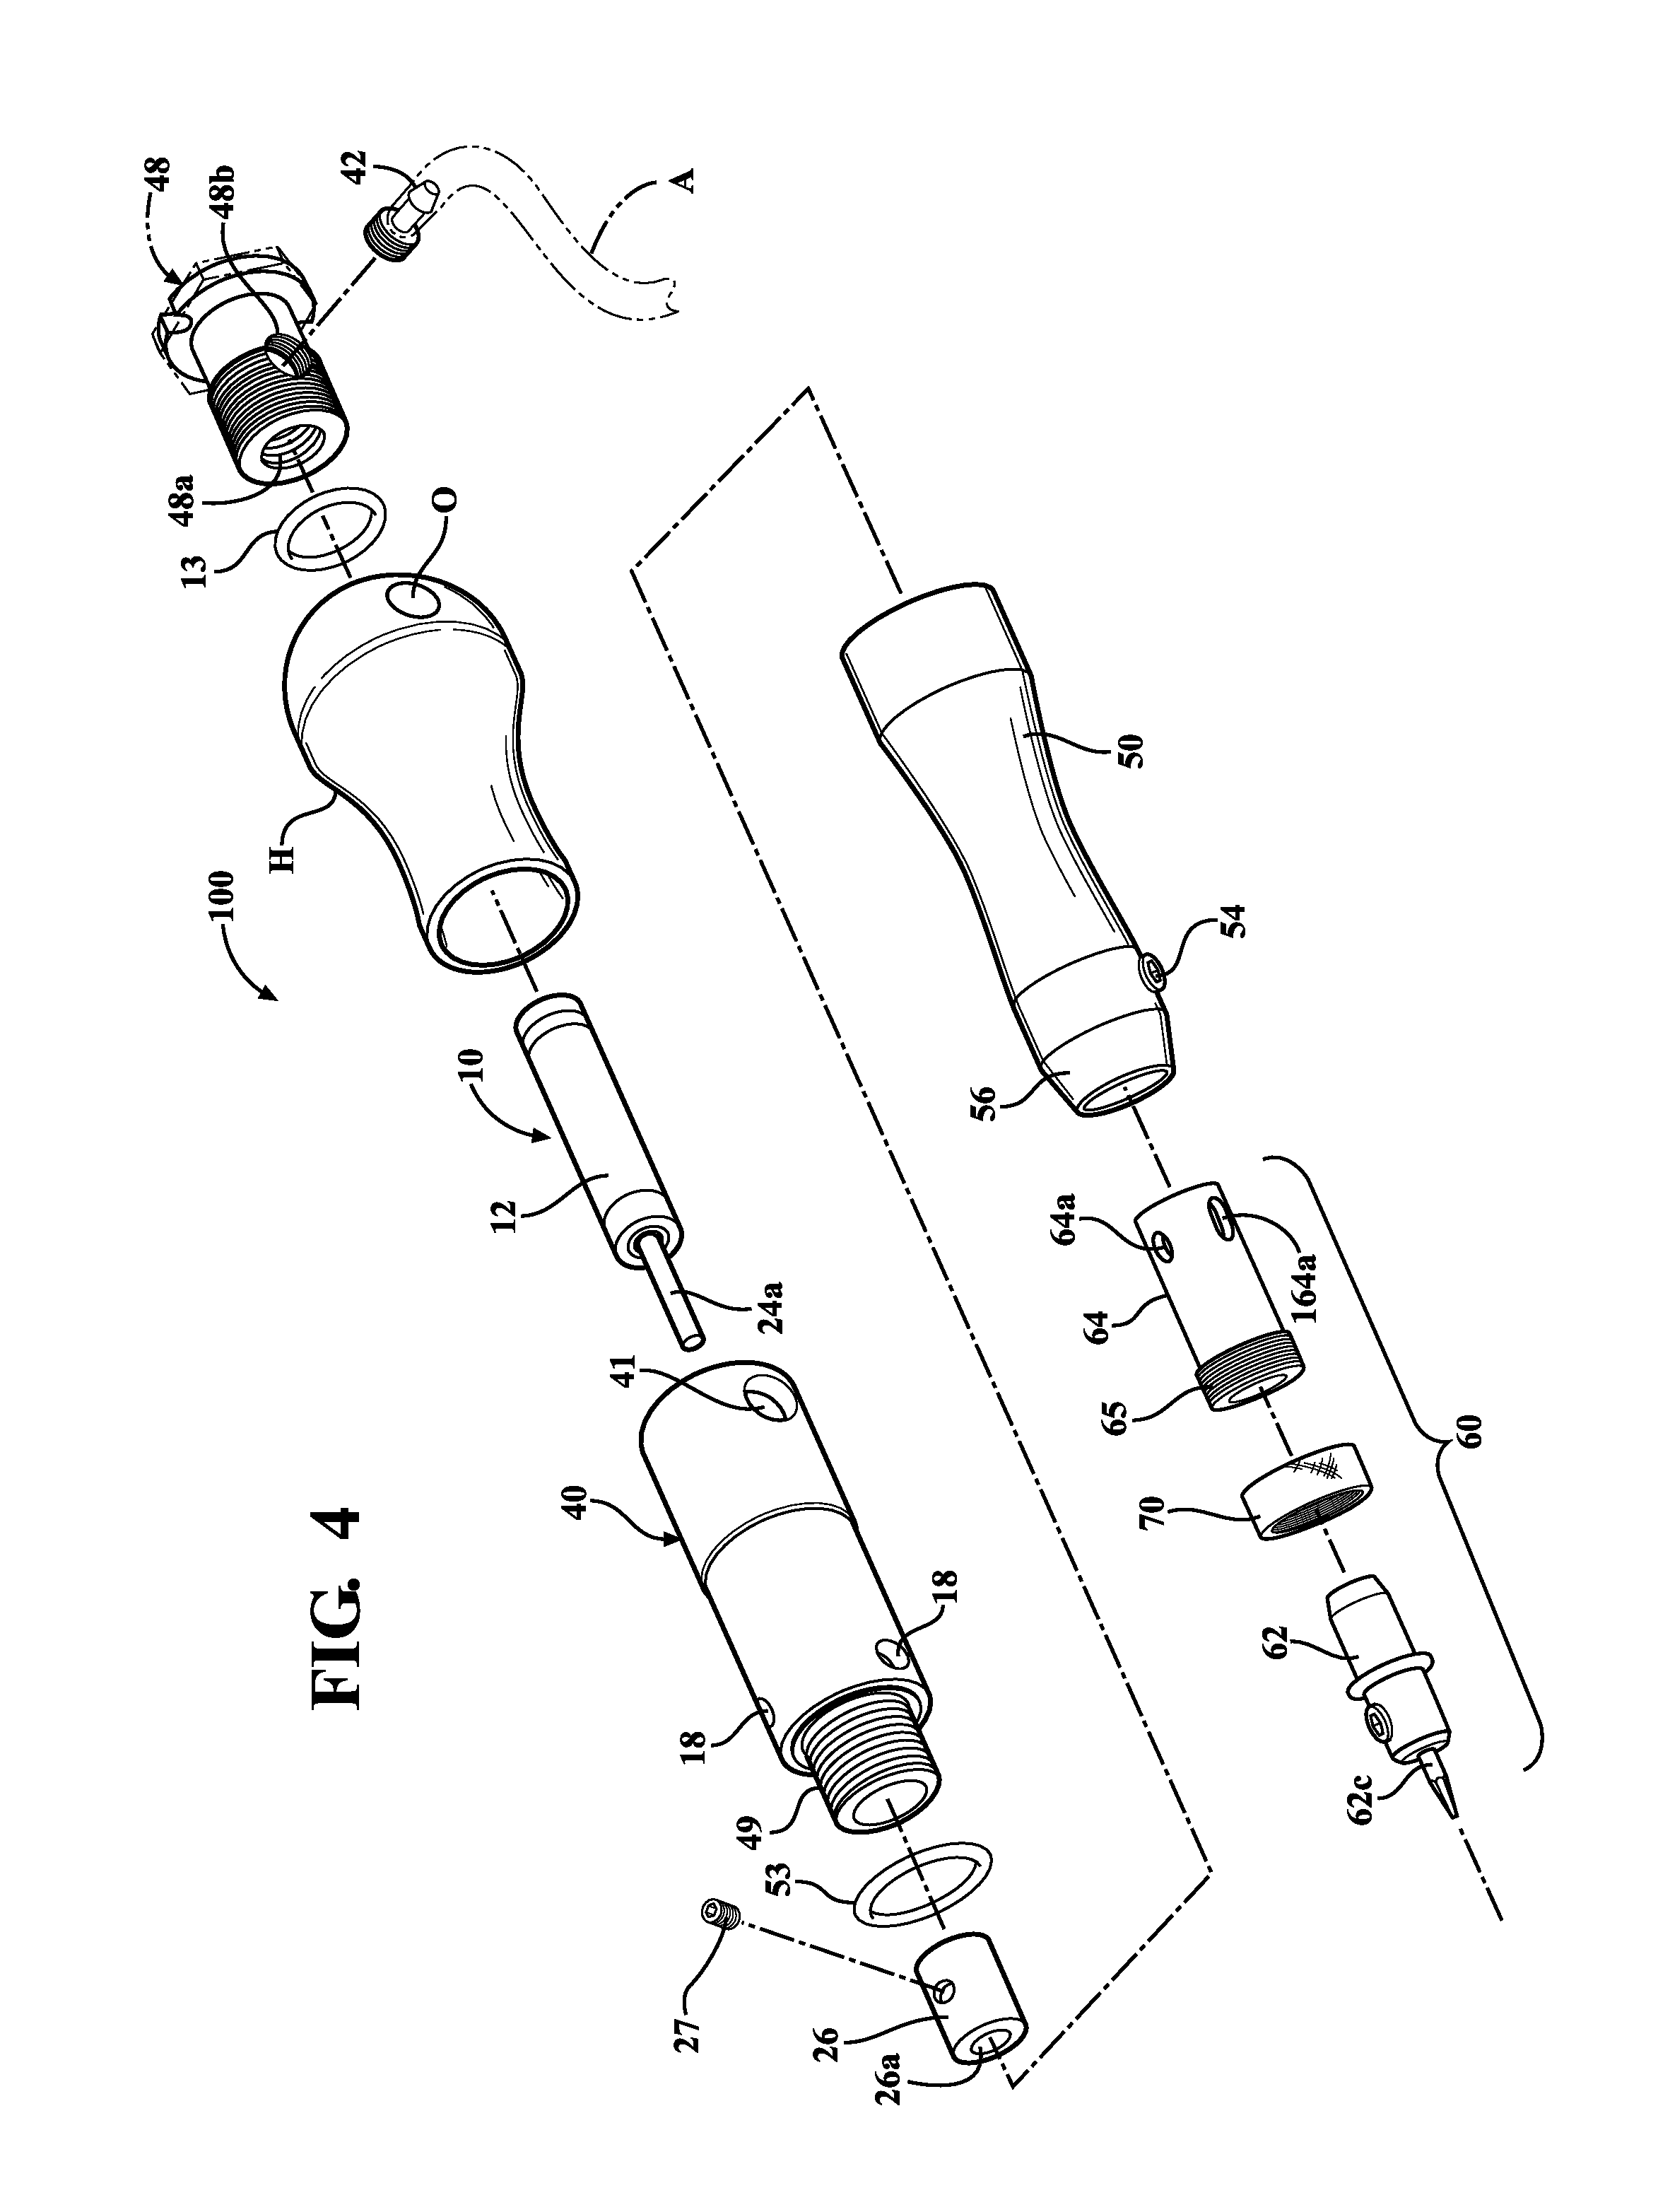 Pneumatic actuator for impact engraving tool